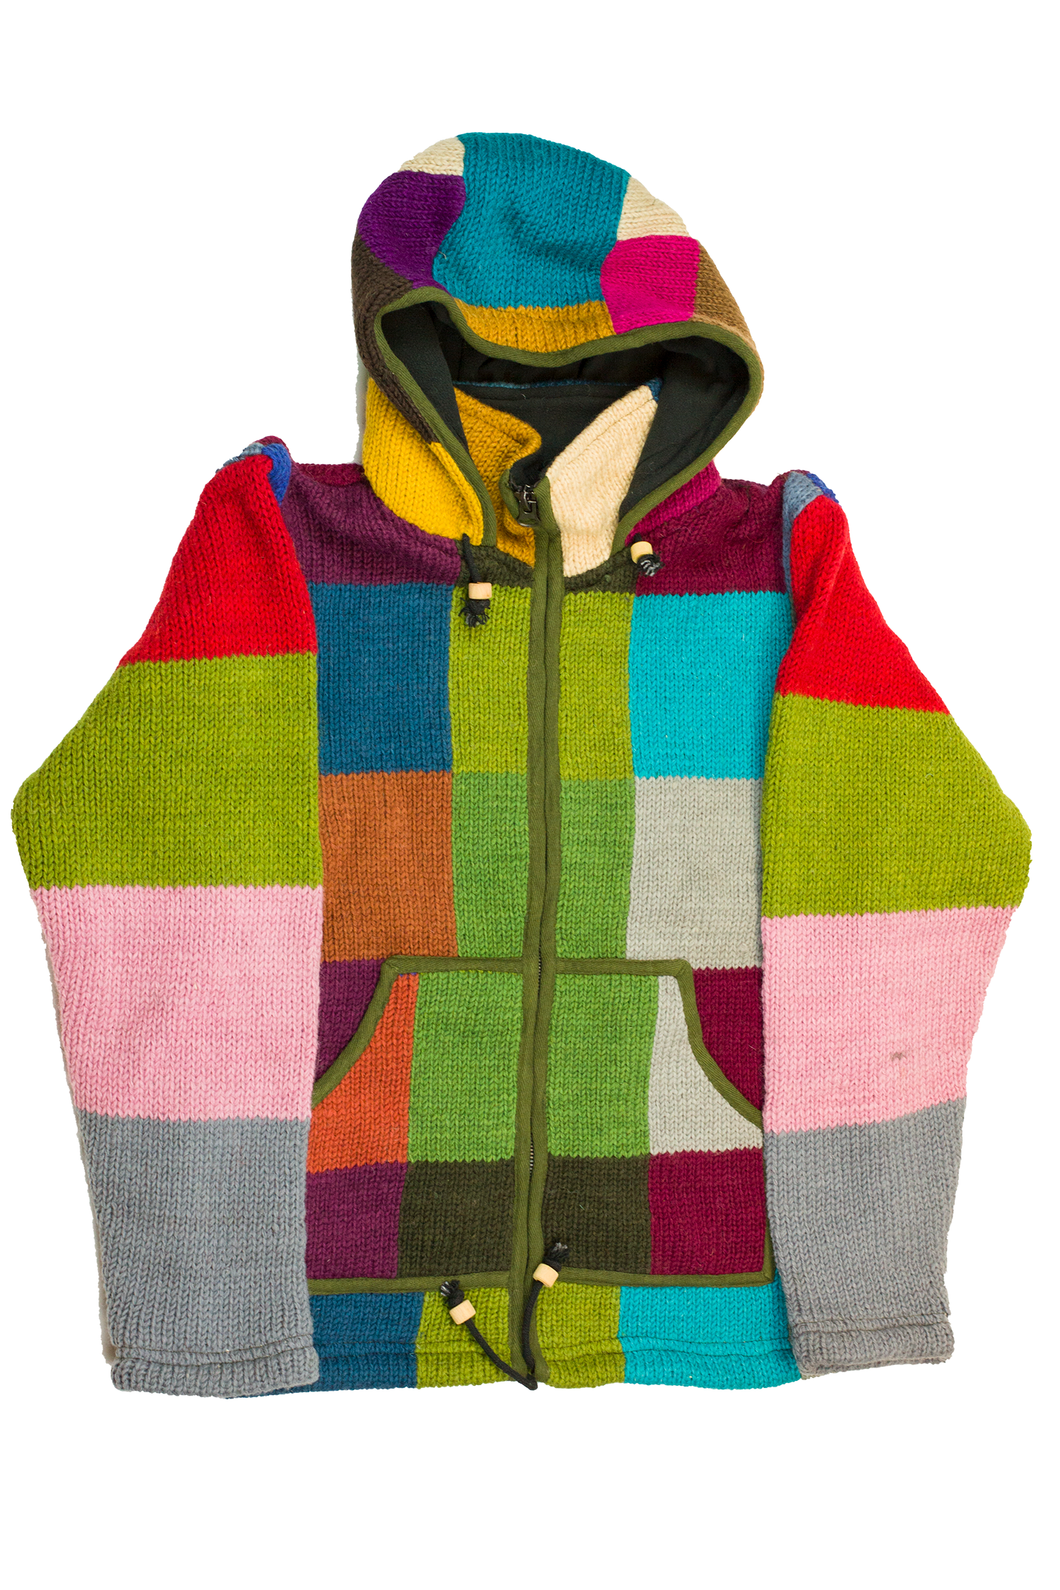 Hand knitted woolen jacket/sweater with soft inner fleece - HMPWJ4